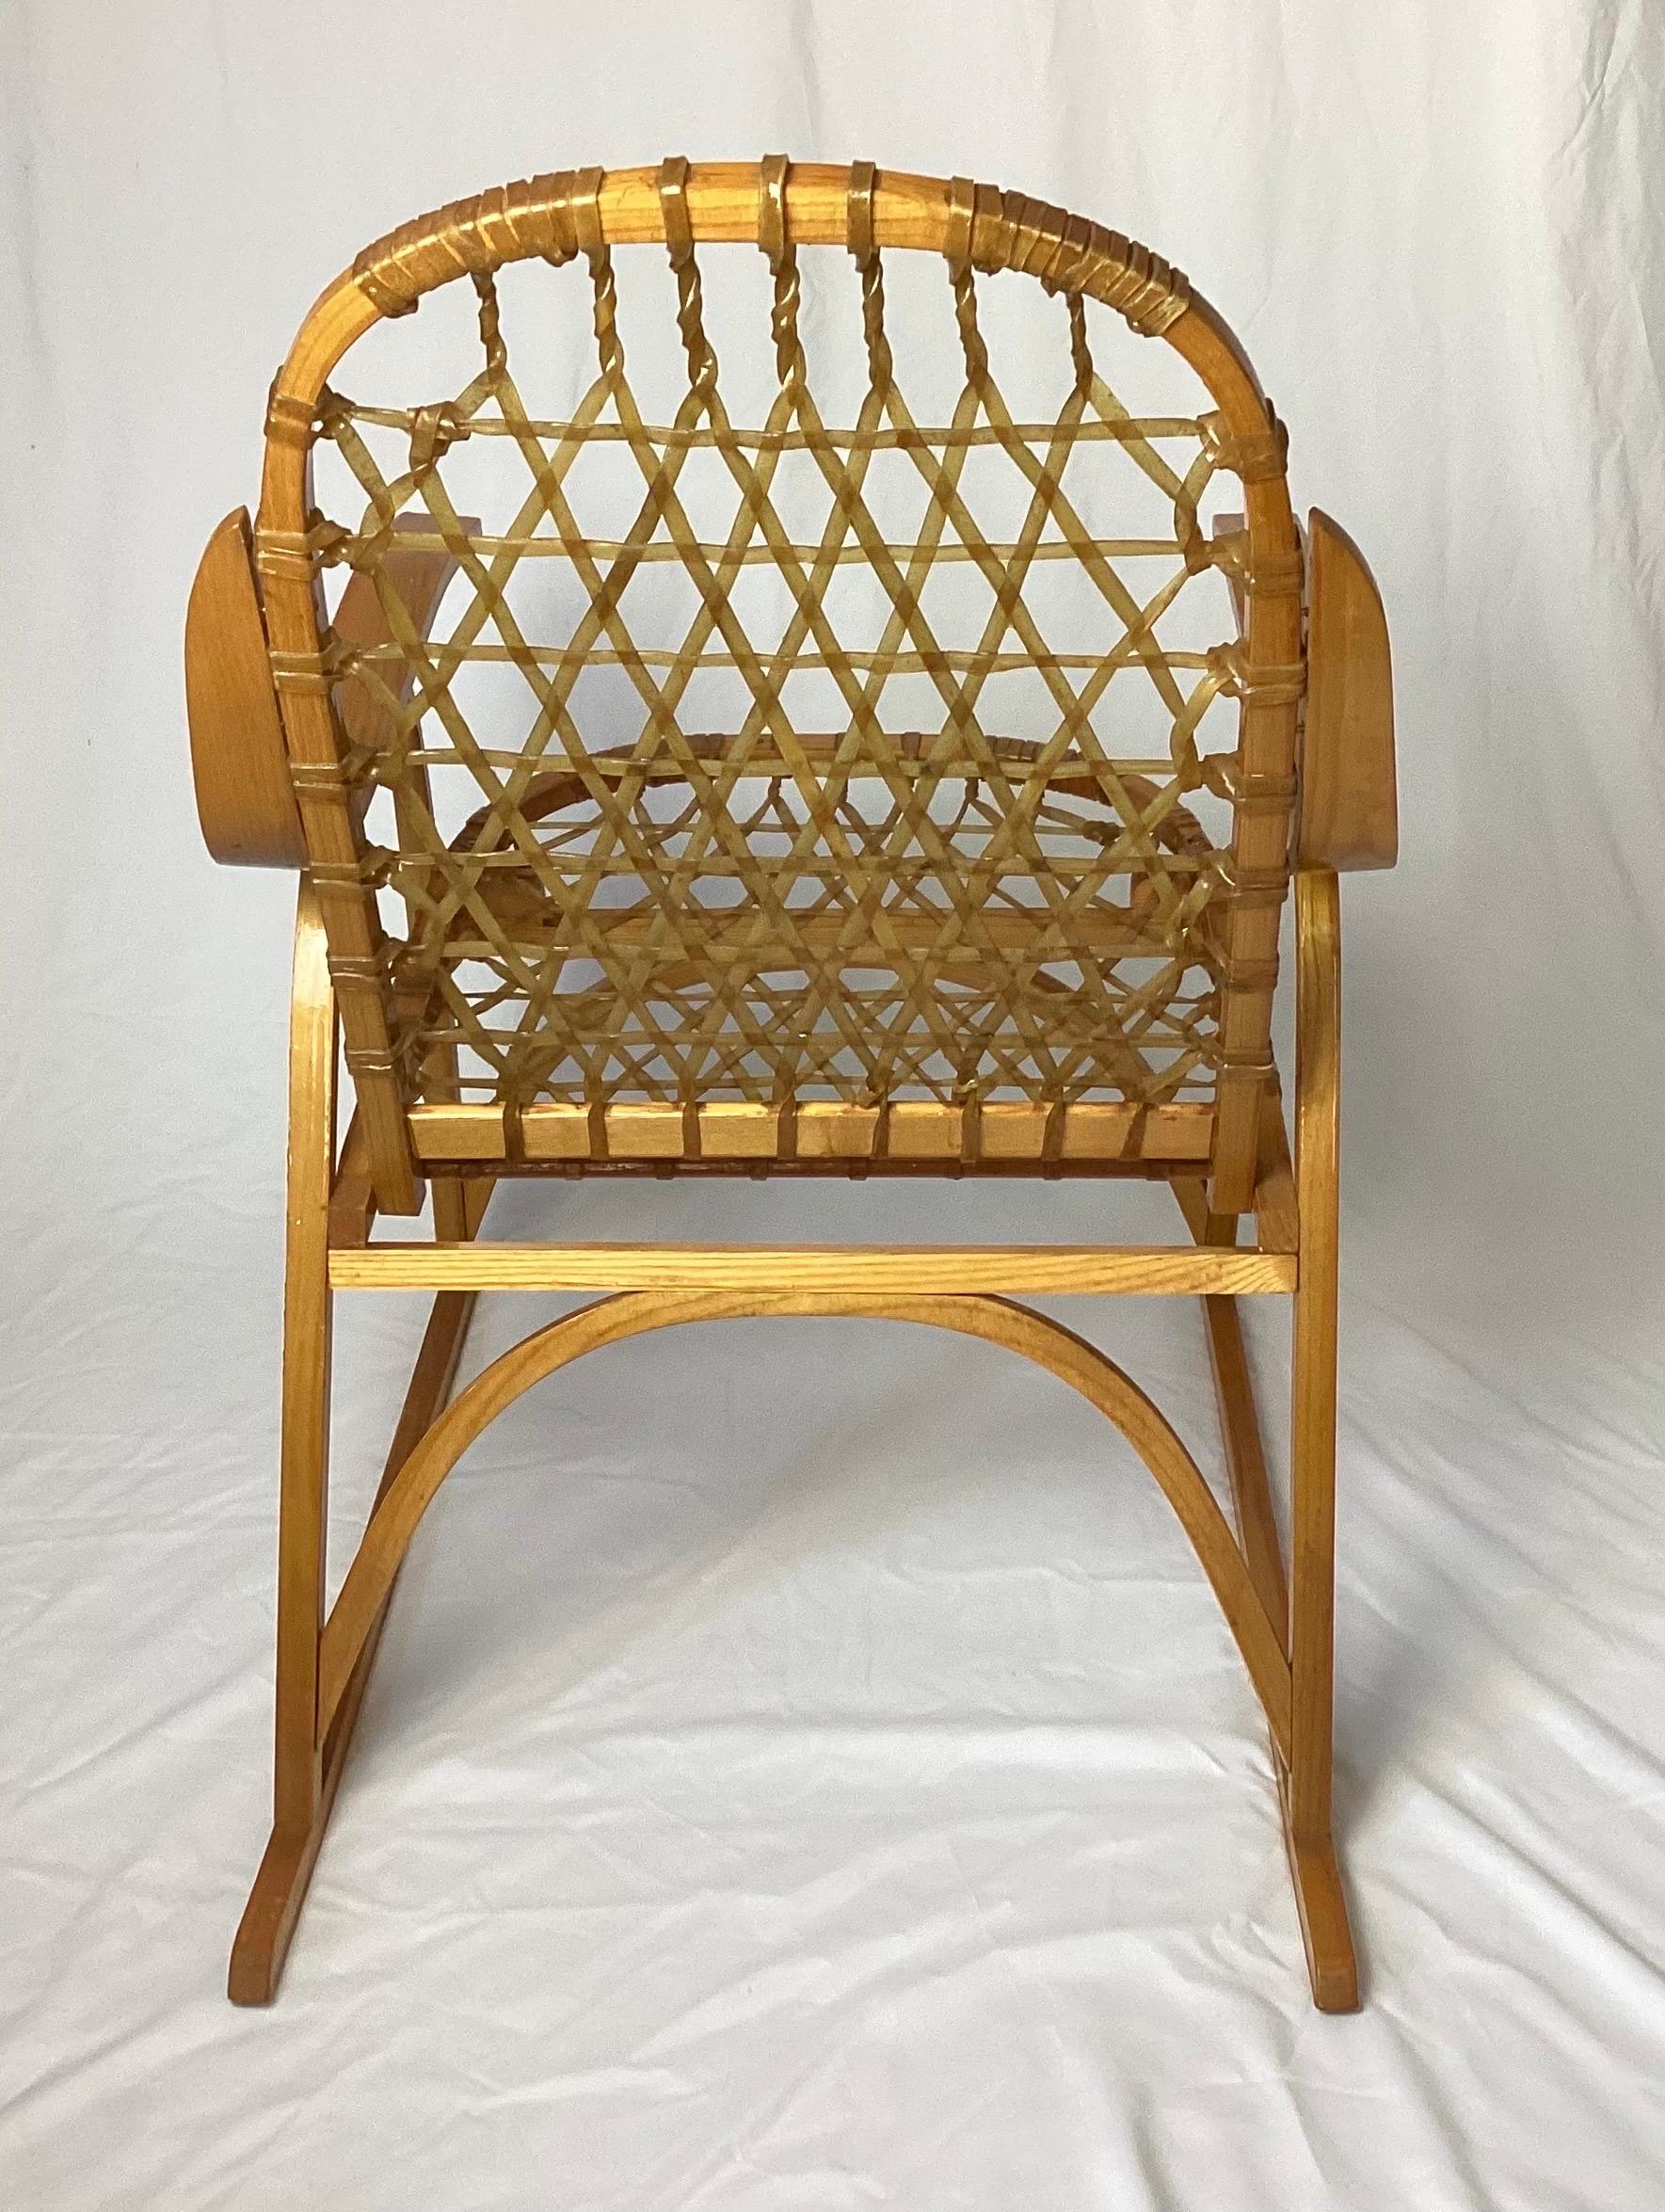 snowshoe chair